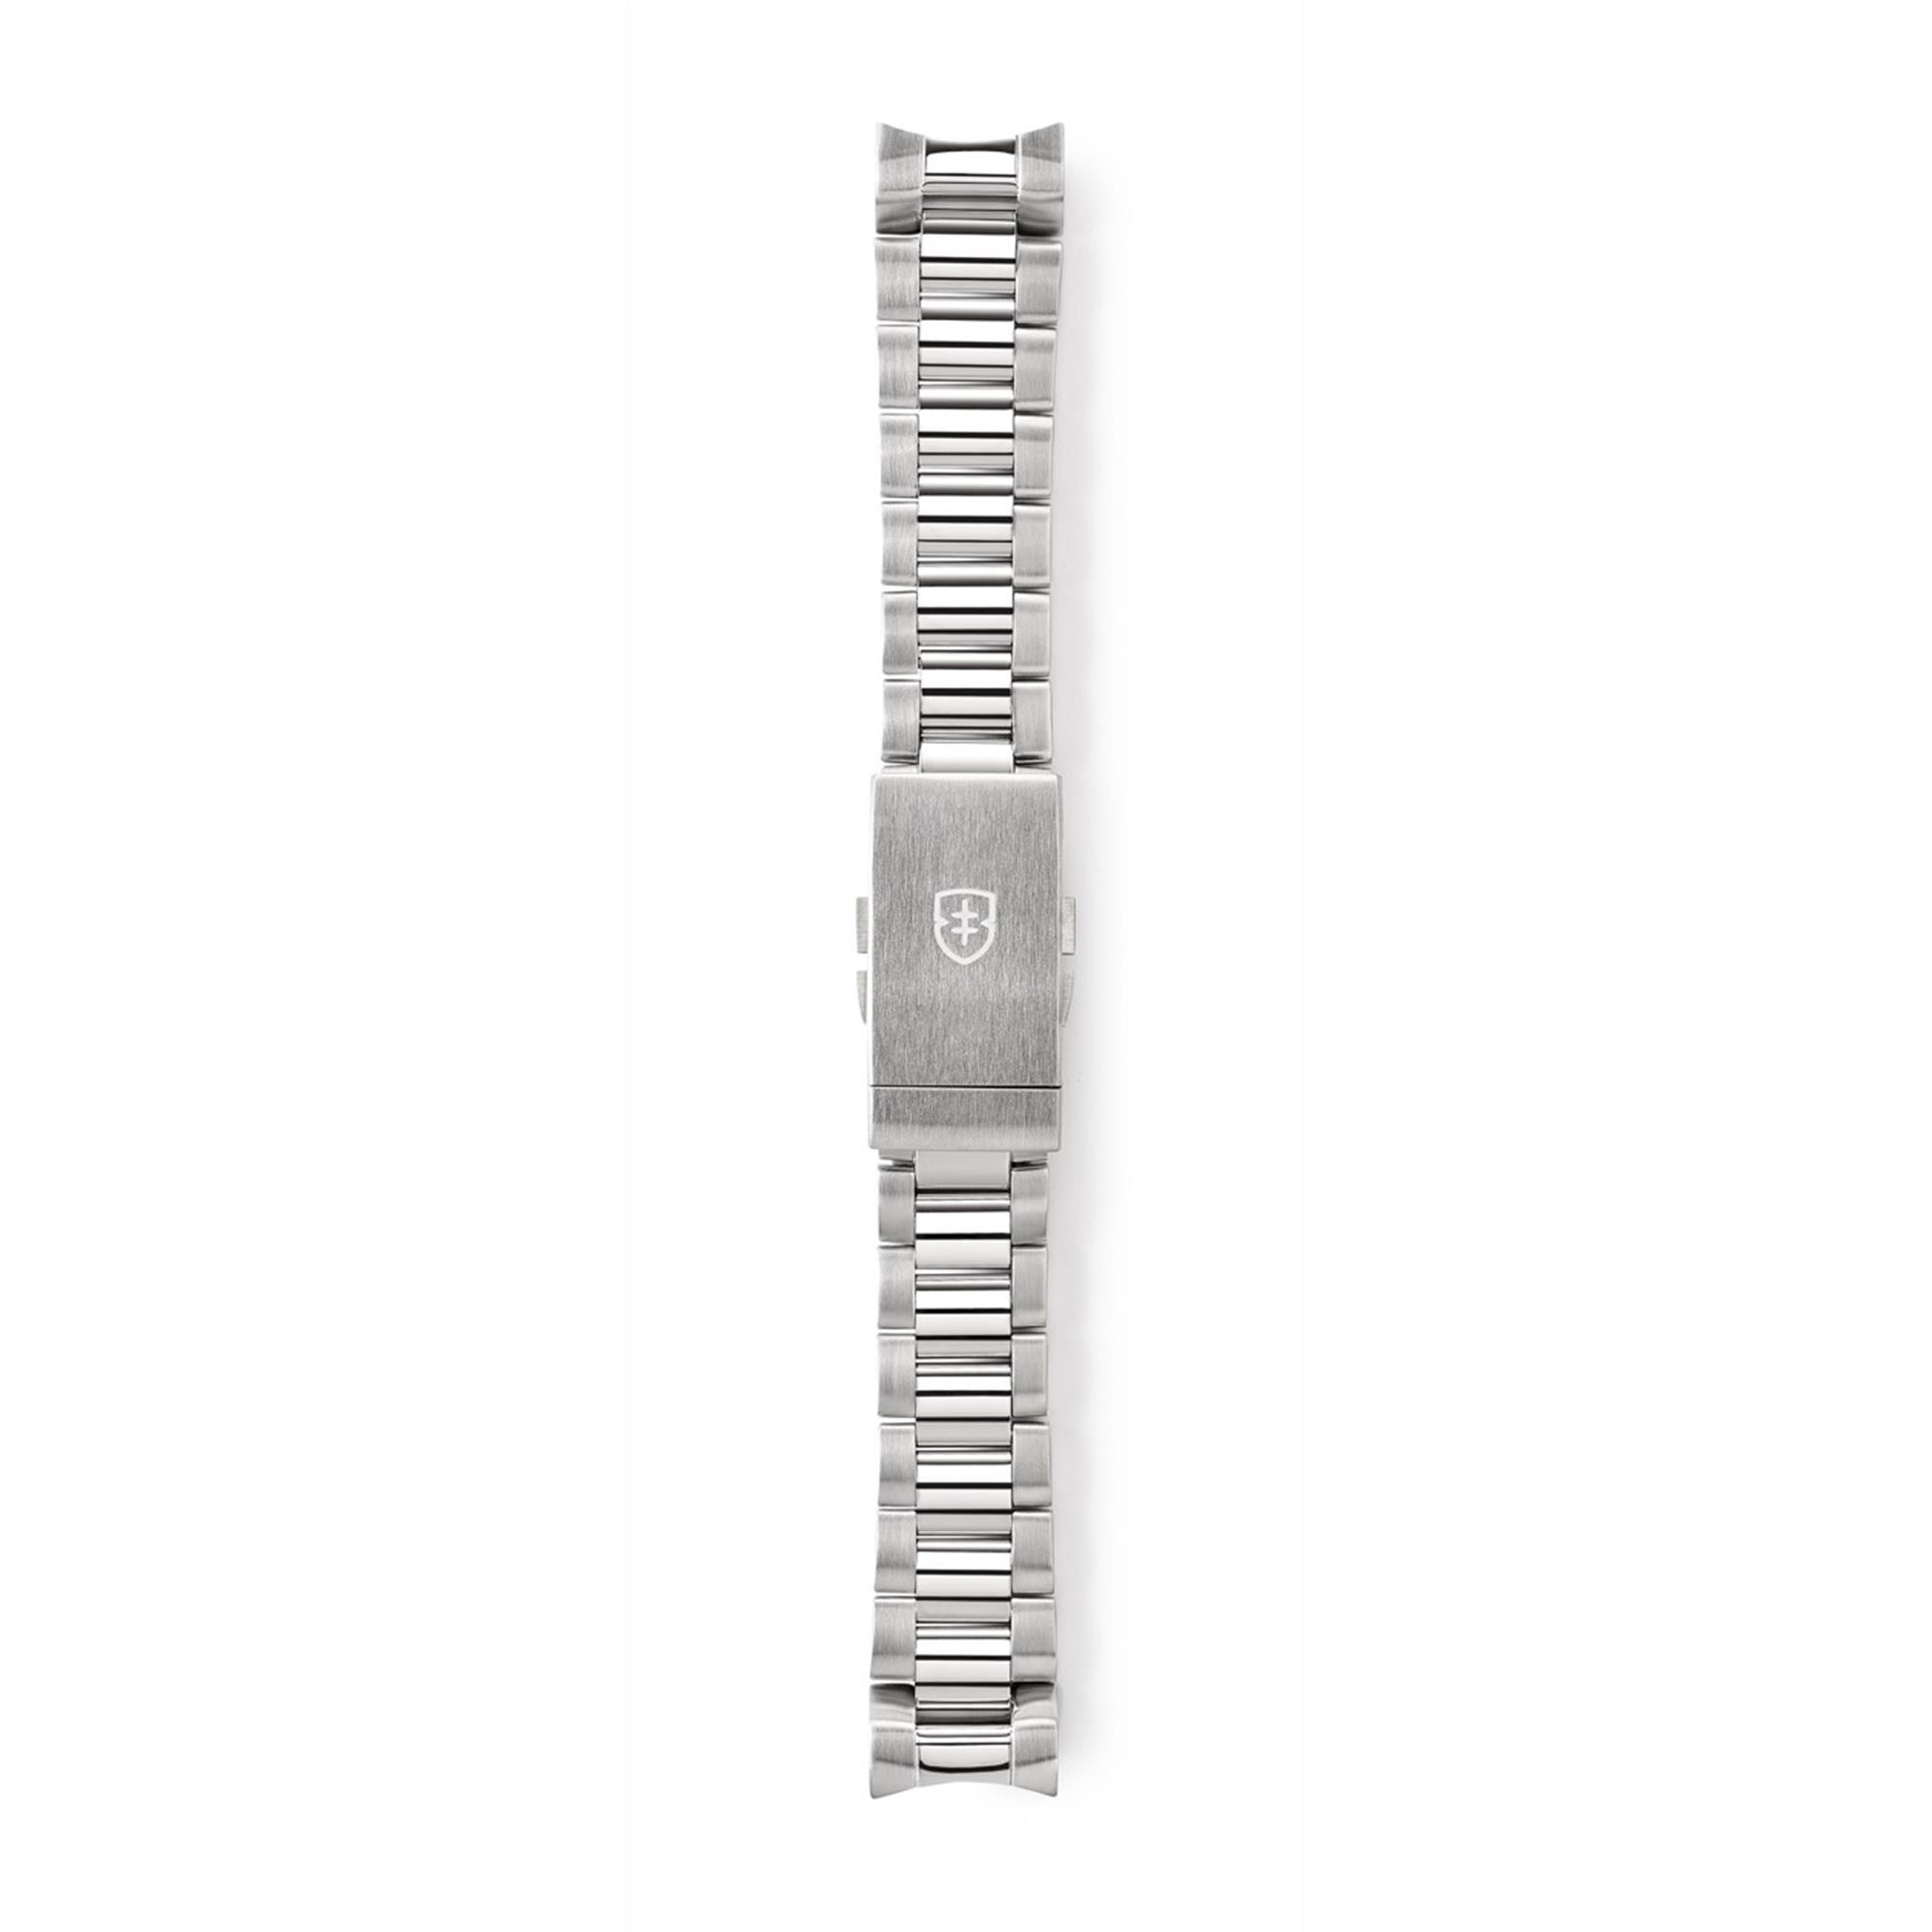 Elliot Brown STL-B52 Kimmeridge Stainless Steel Bracelet product